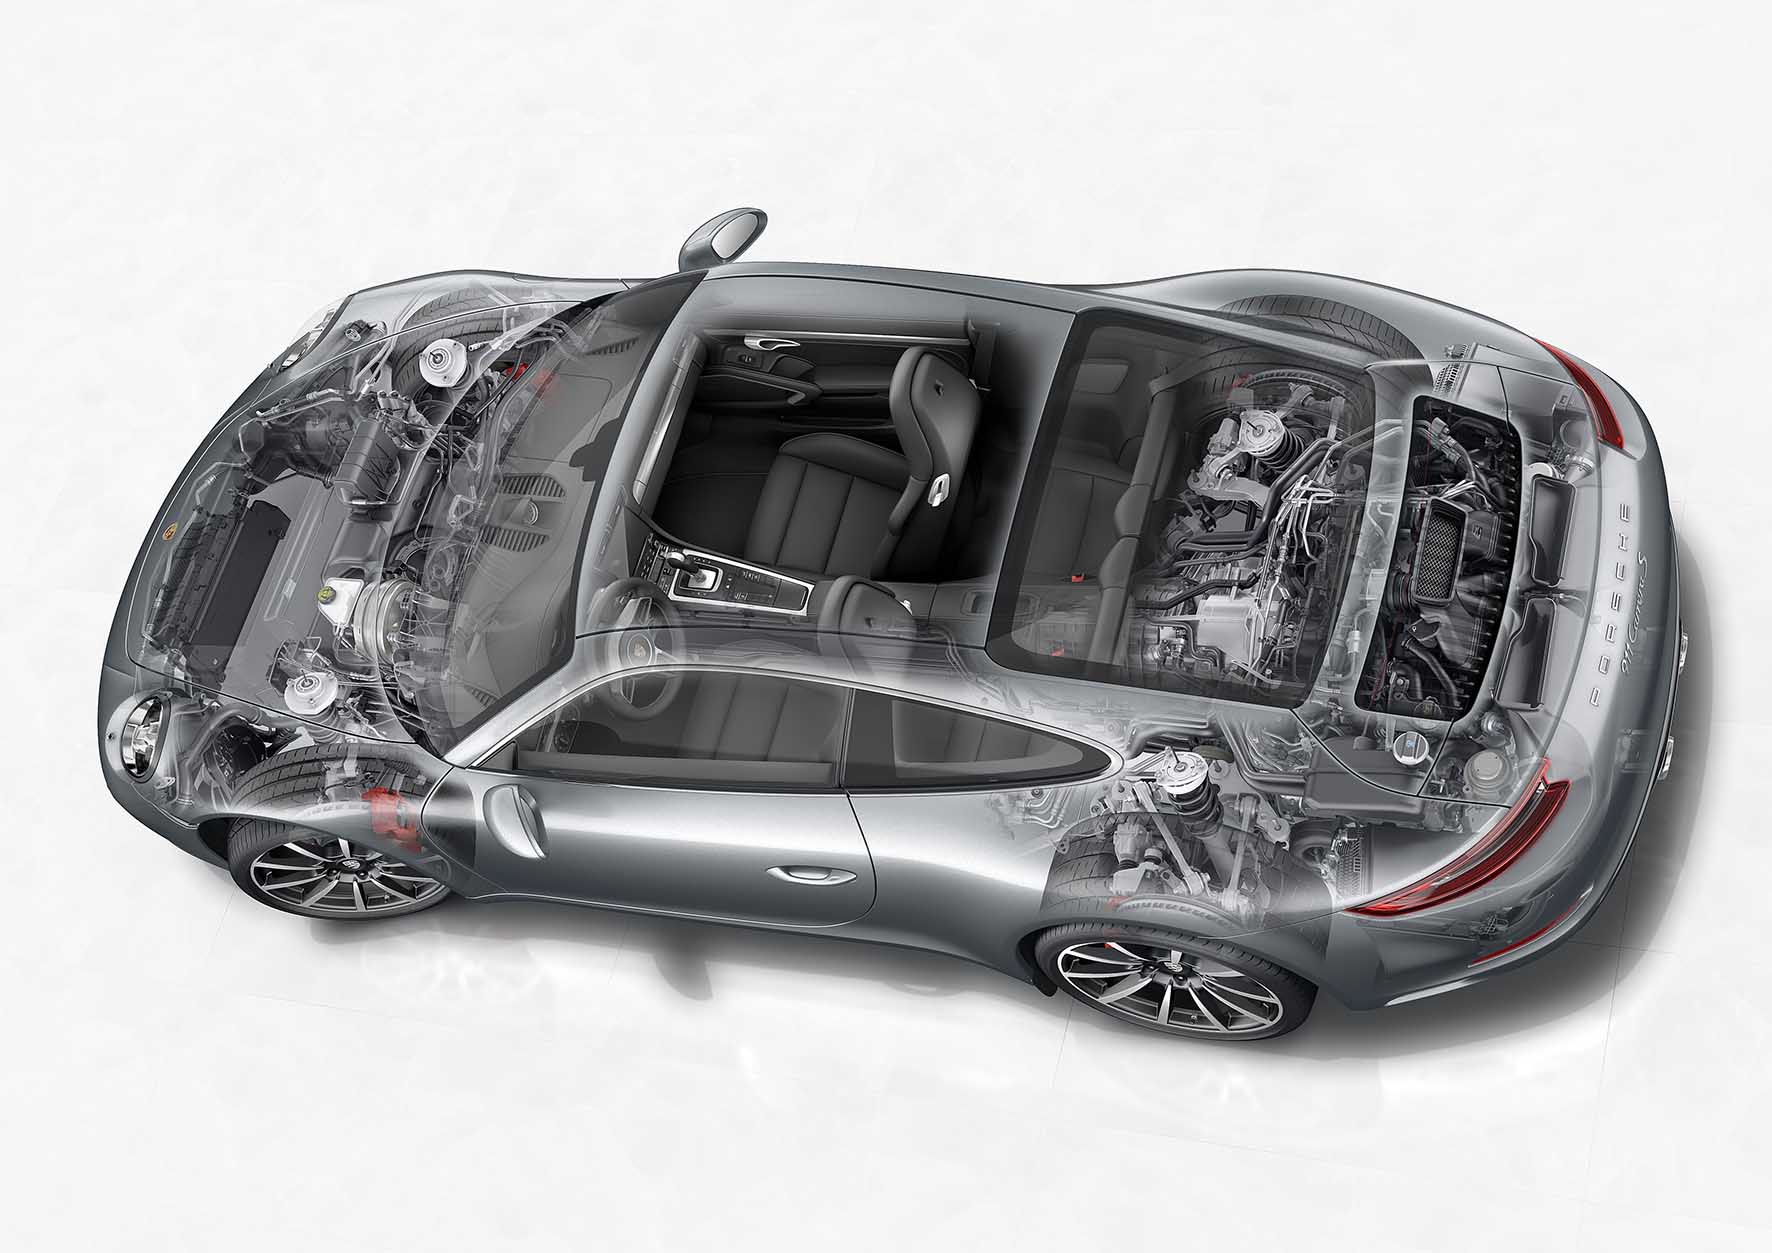 Porsche 2016 nuova 911 3.0 litri turbo trasparenza